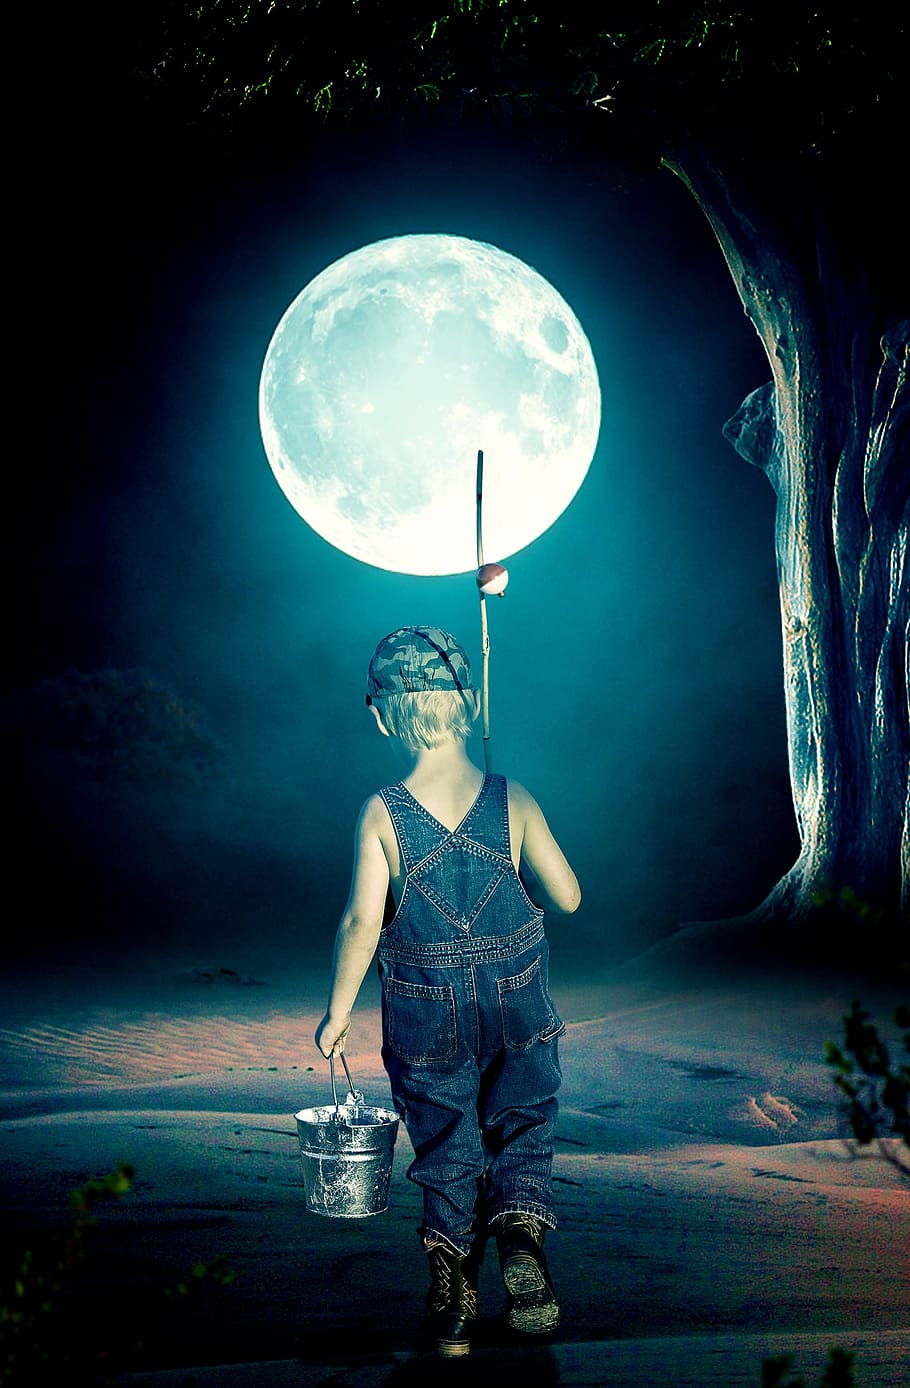 boy, holding, fishing rod, pail, night time illustration, full moon, moon, dark, moonlight, nature